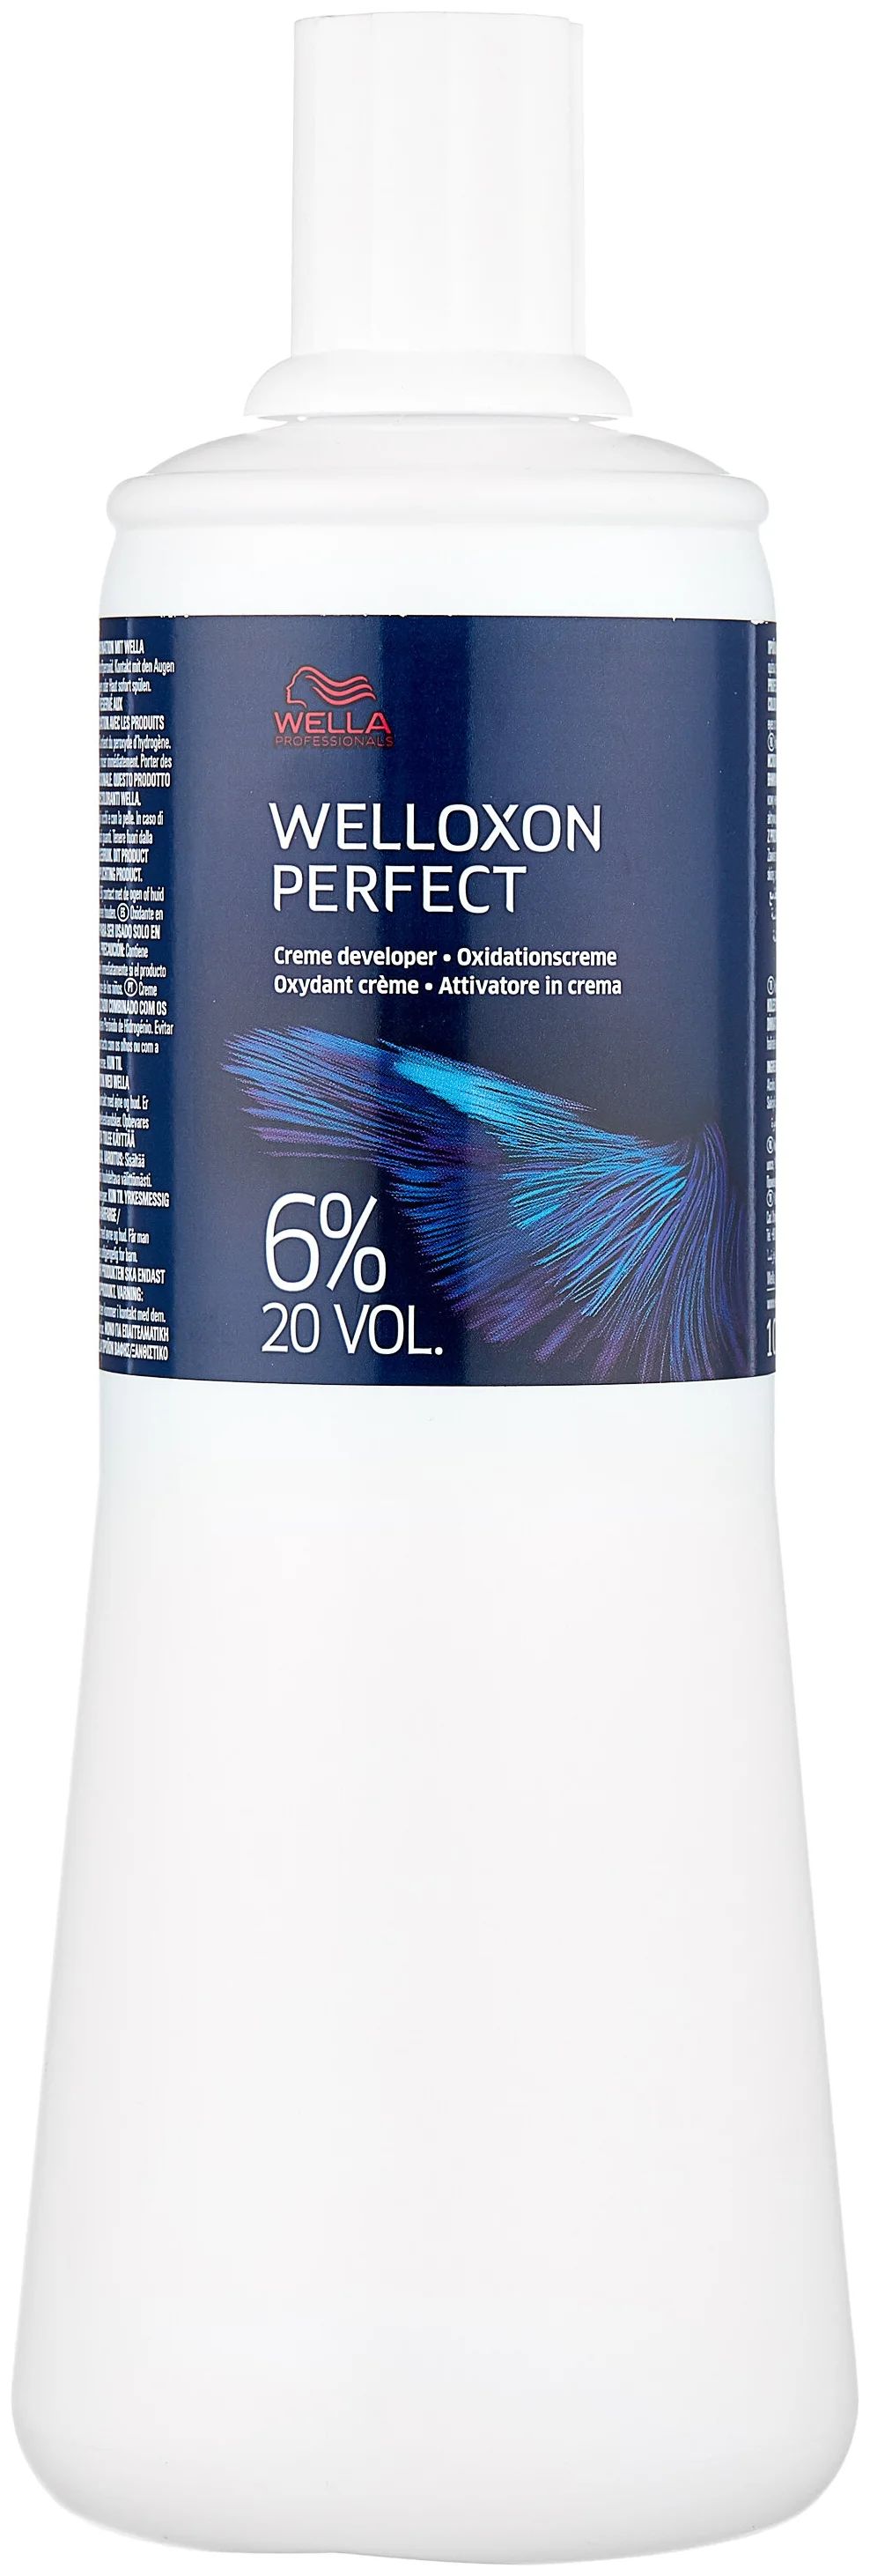 Краска для волос Wella Welloxon Koleston Perfect 6% крем-проявитель, 1 л крем проявитель pro oxyde 20vol 6%